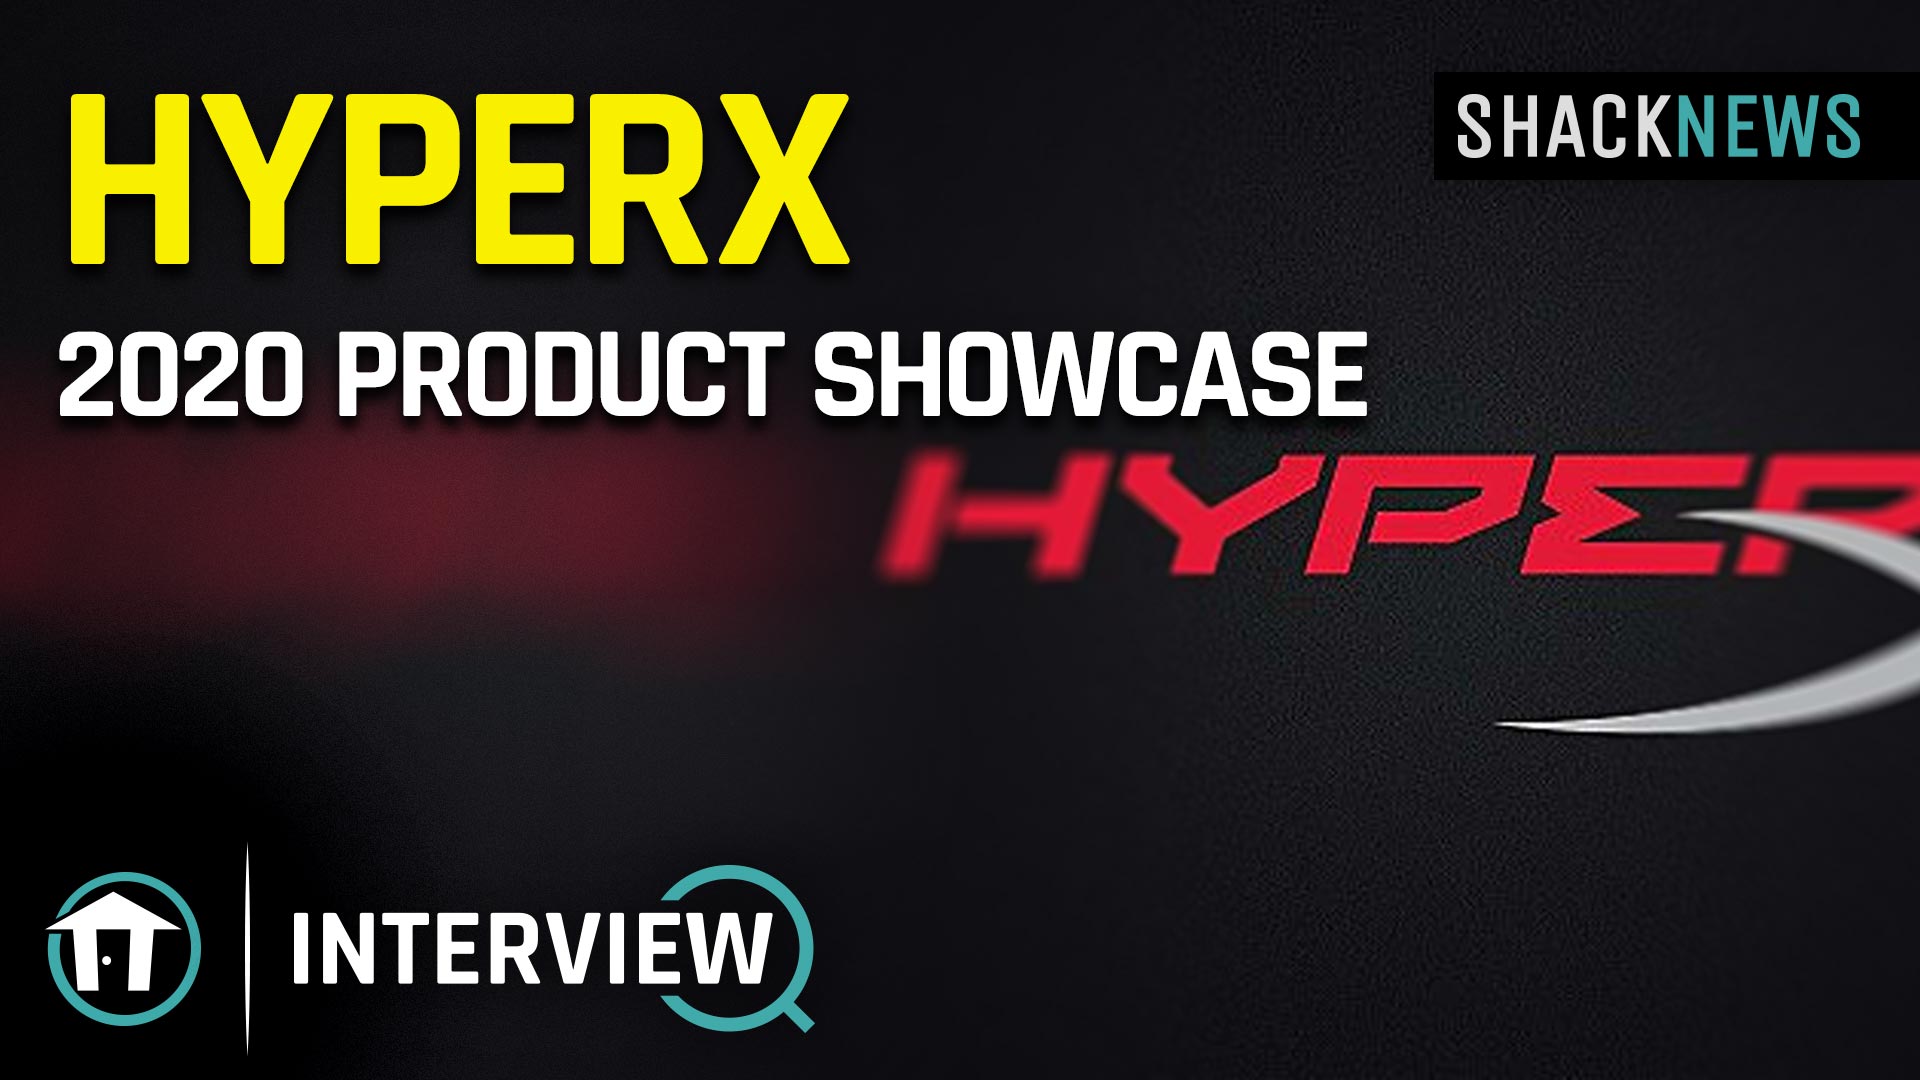 Wawancara: Pameran produk HyperX 2020